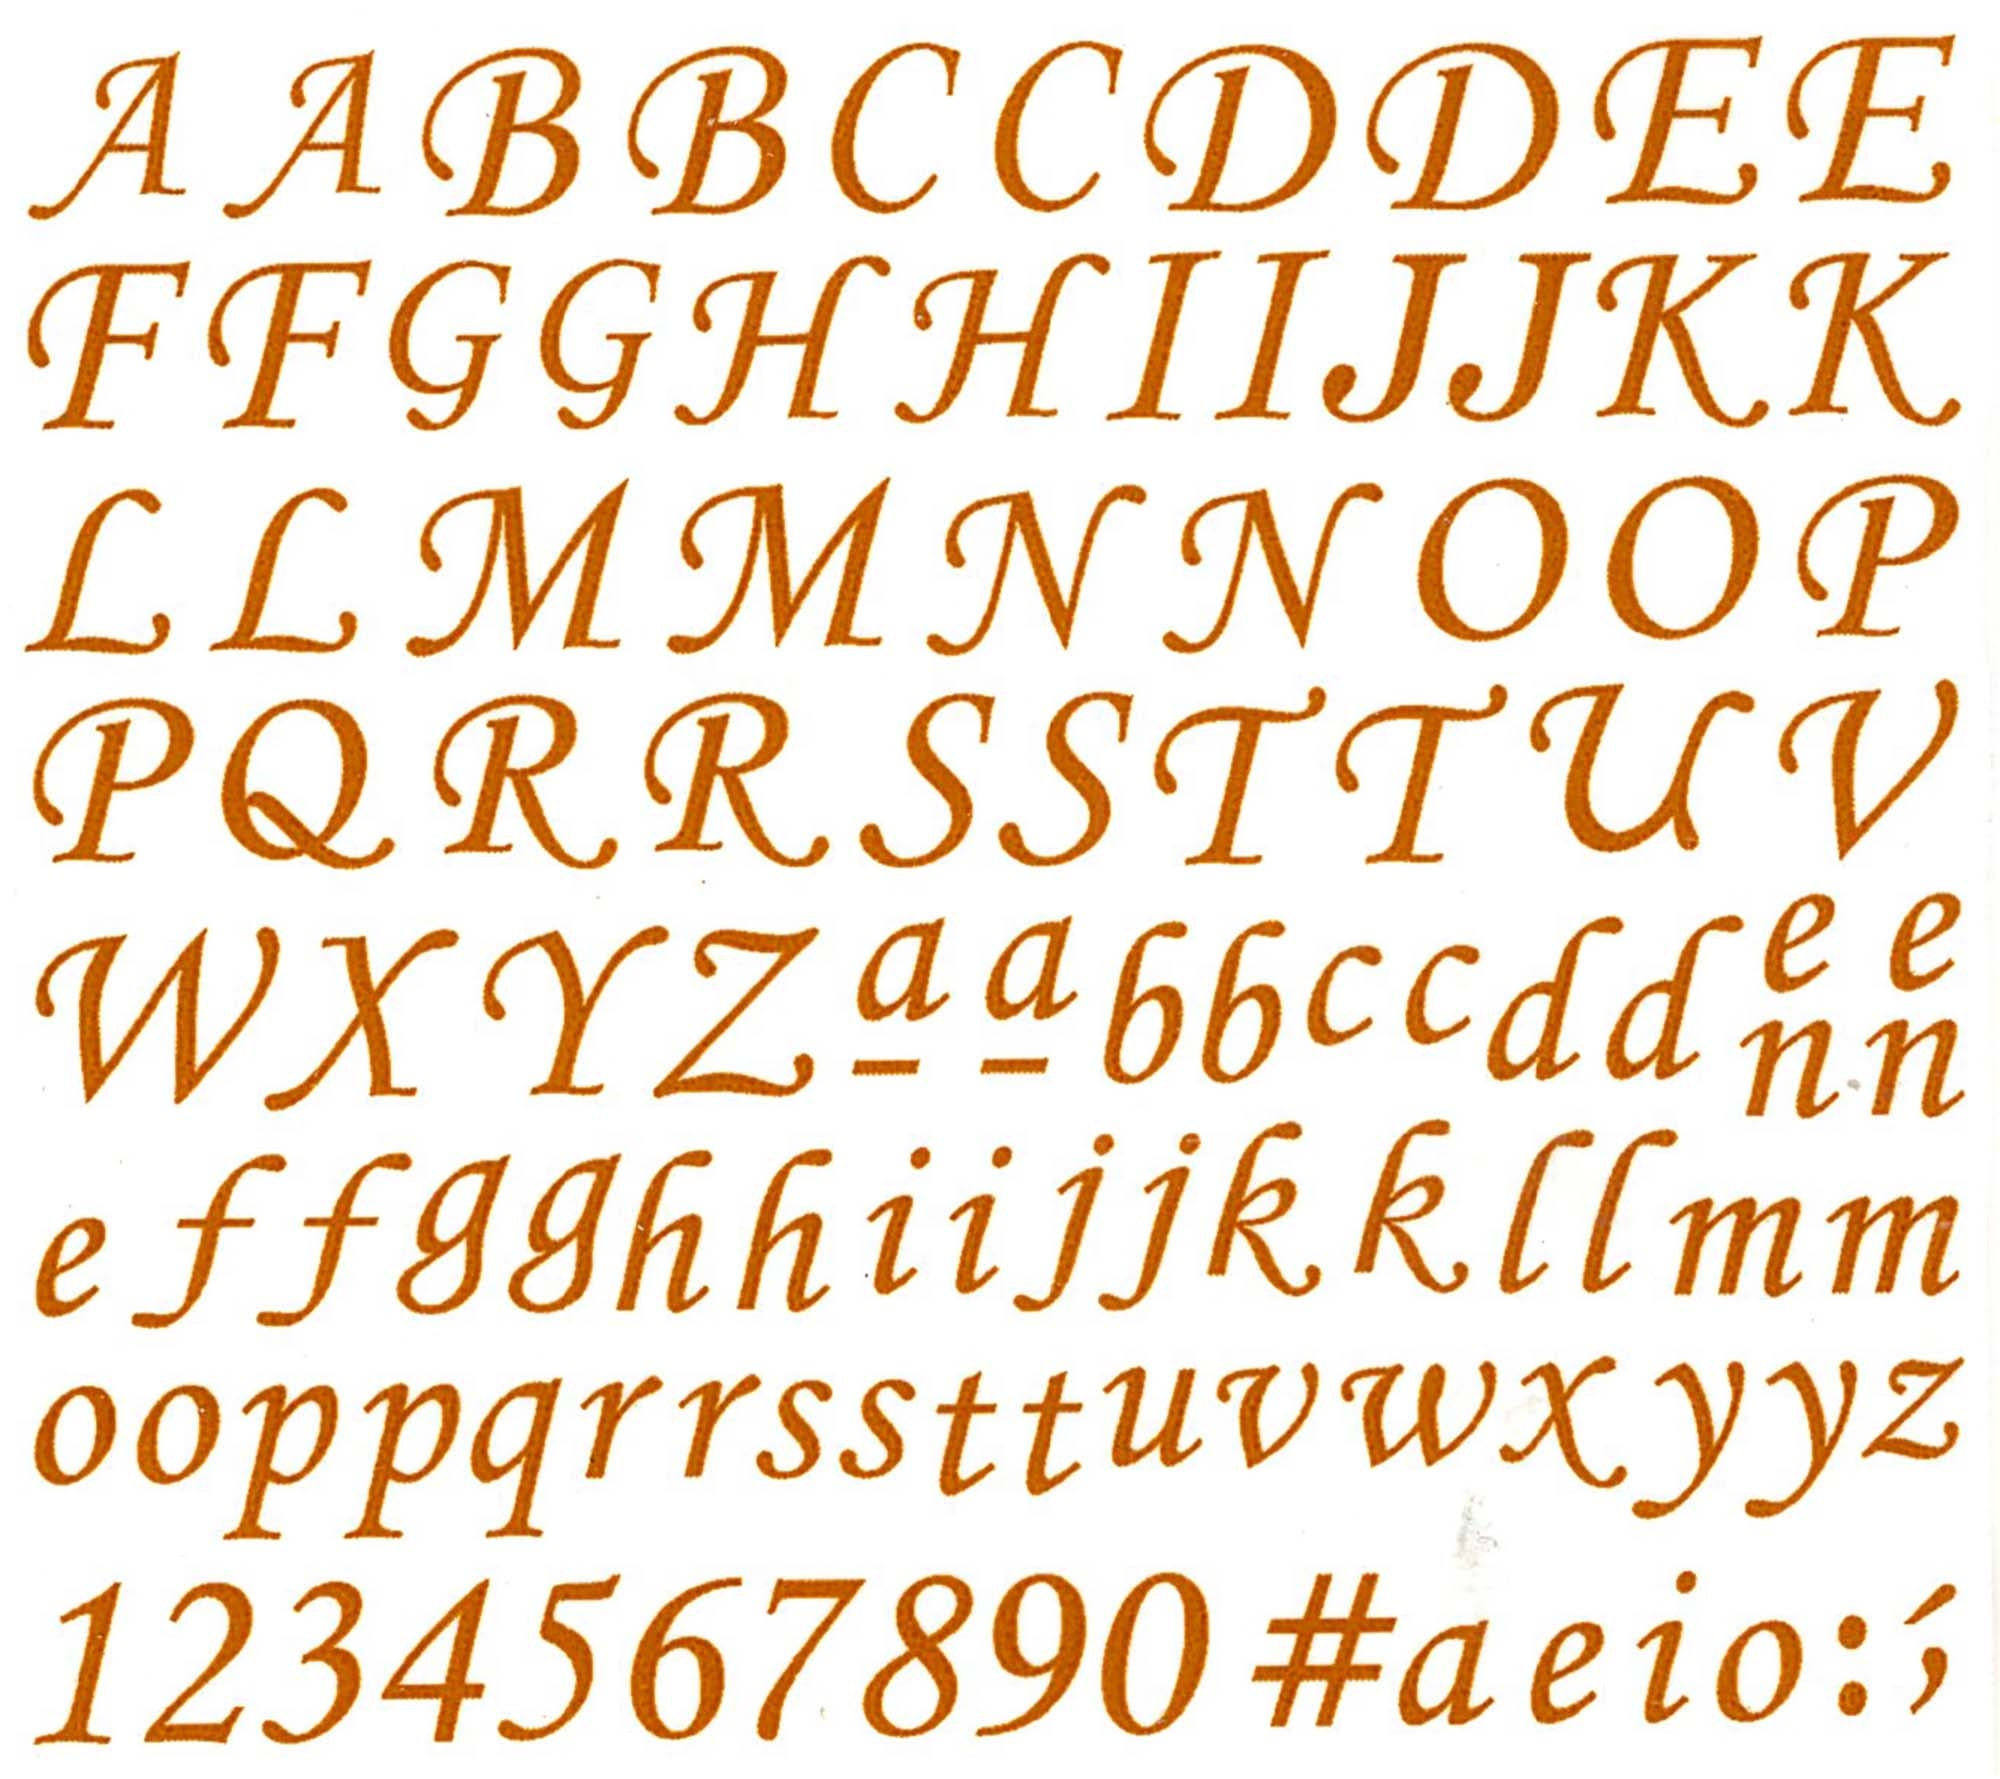 Script Font 3/8 Alphabet Letters Gold 986 Silk Screen | Etsy